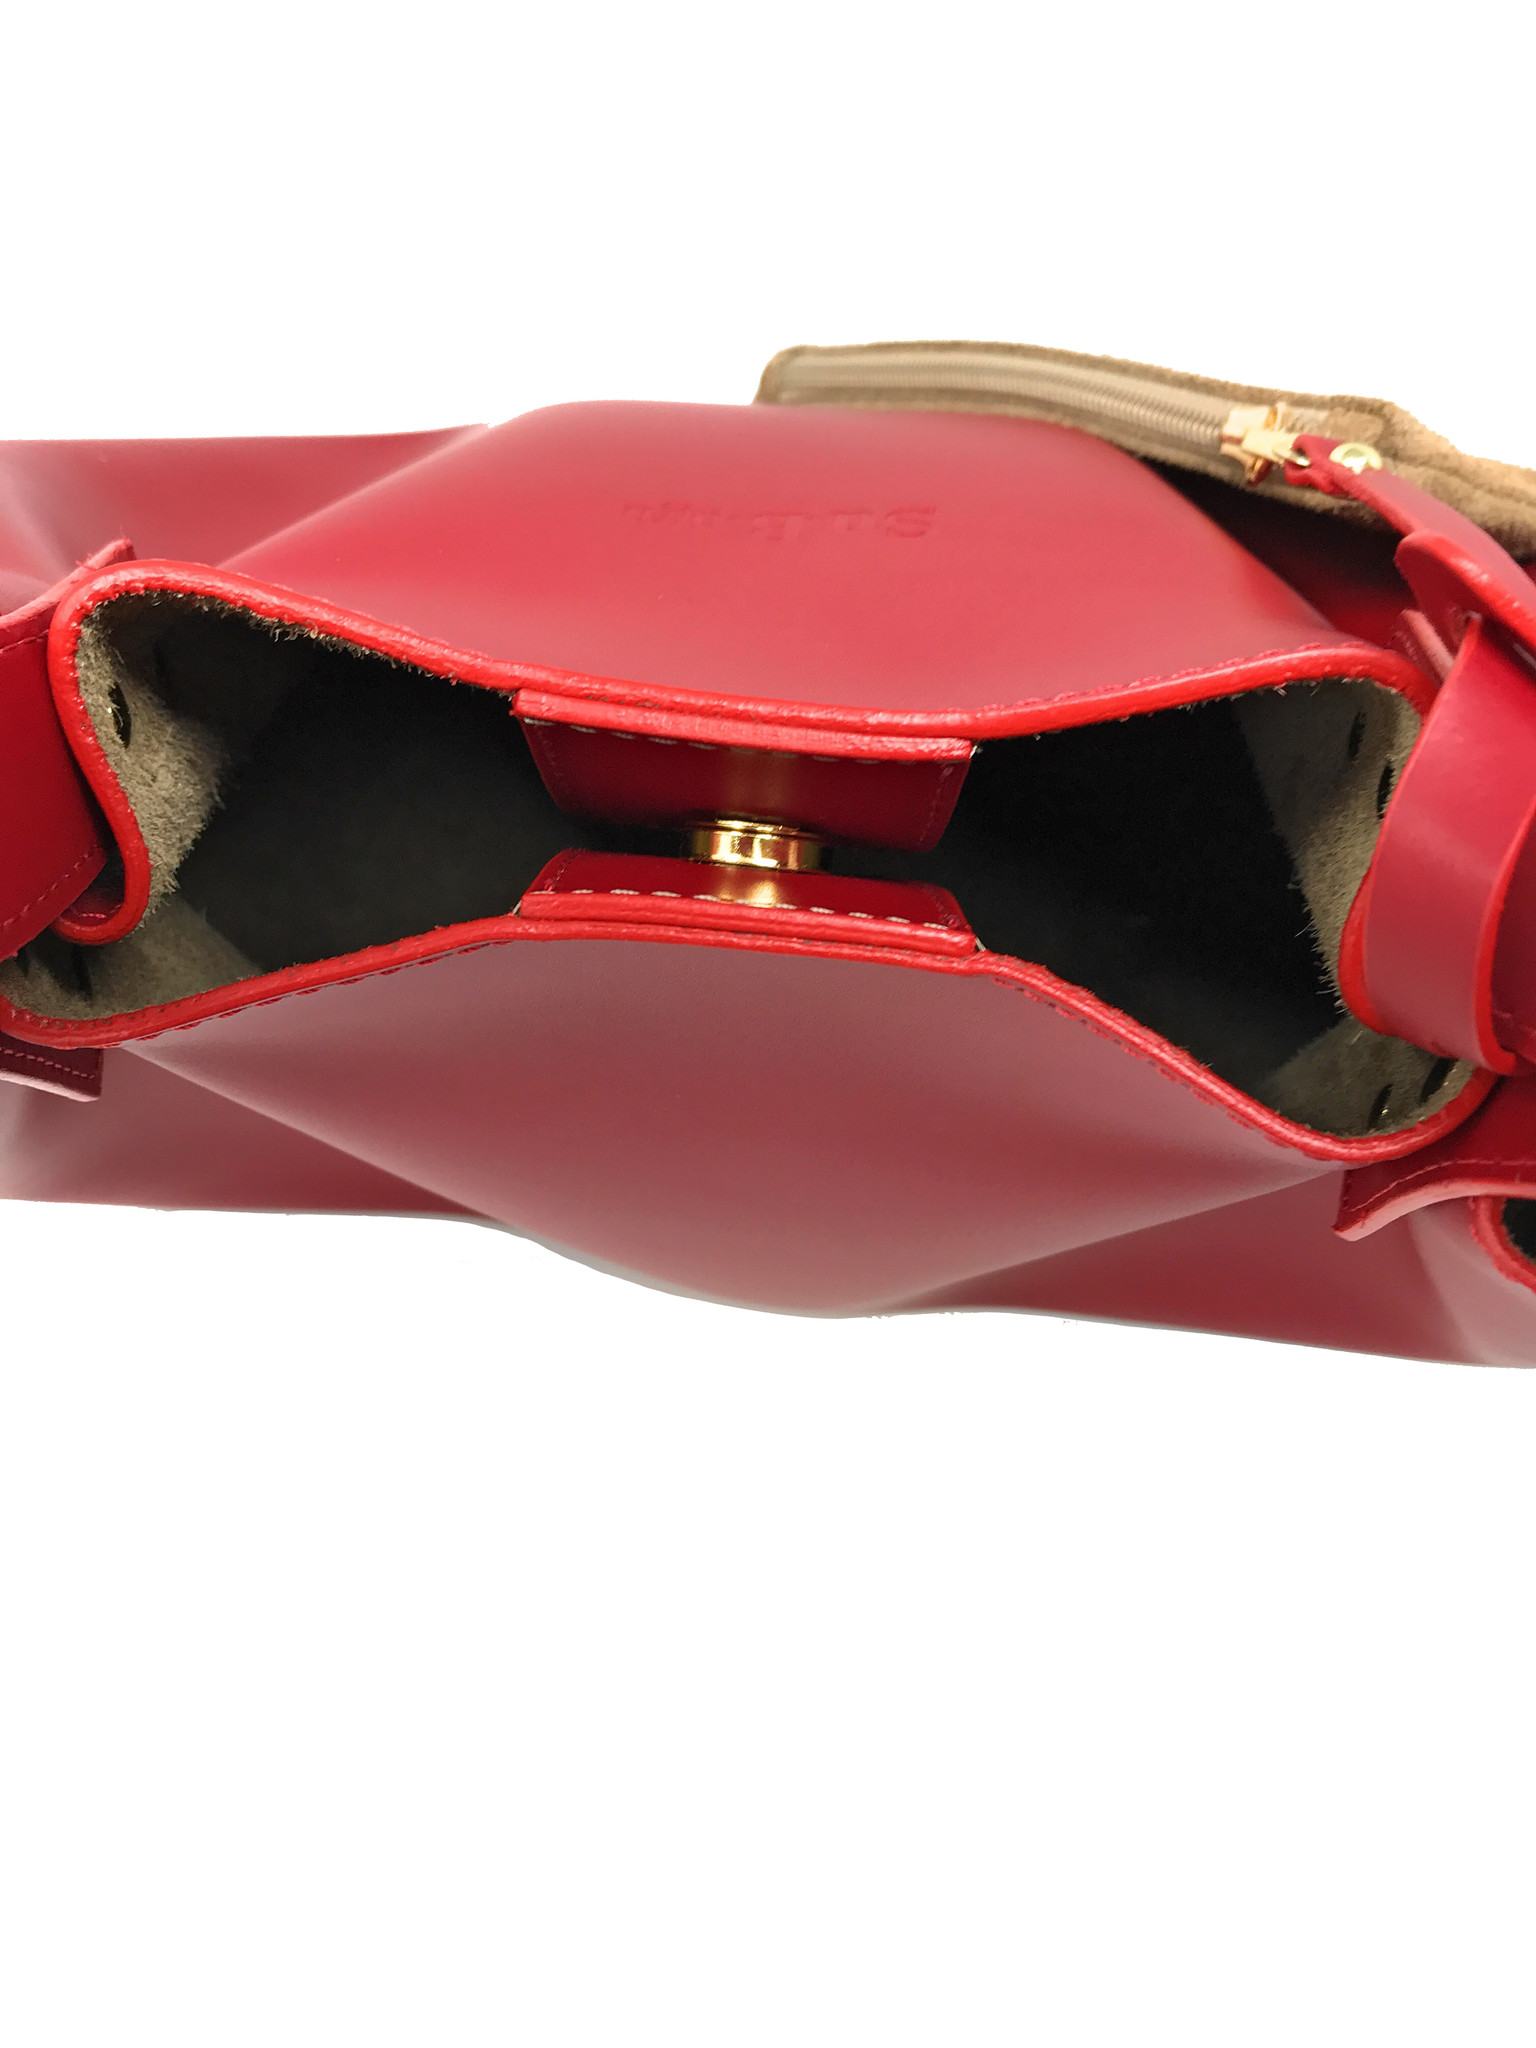 Luxurious Leather tote for women - shoulder bag, shopping bag - shopper - handbag  - Red-7